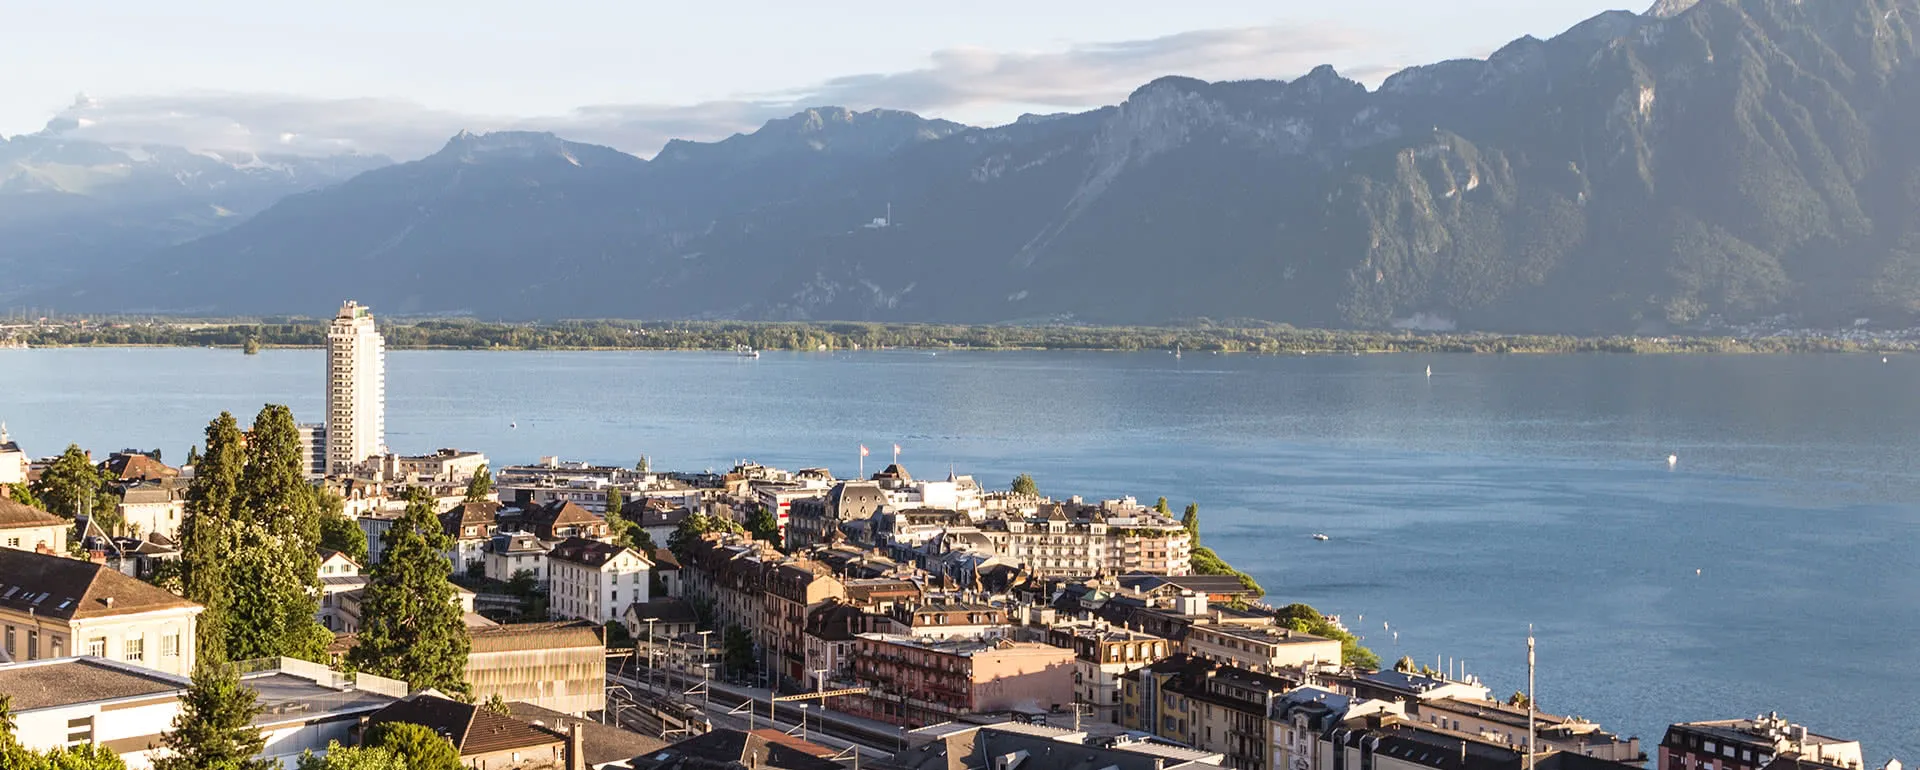 Montreux - the destination for business travel